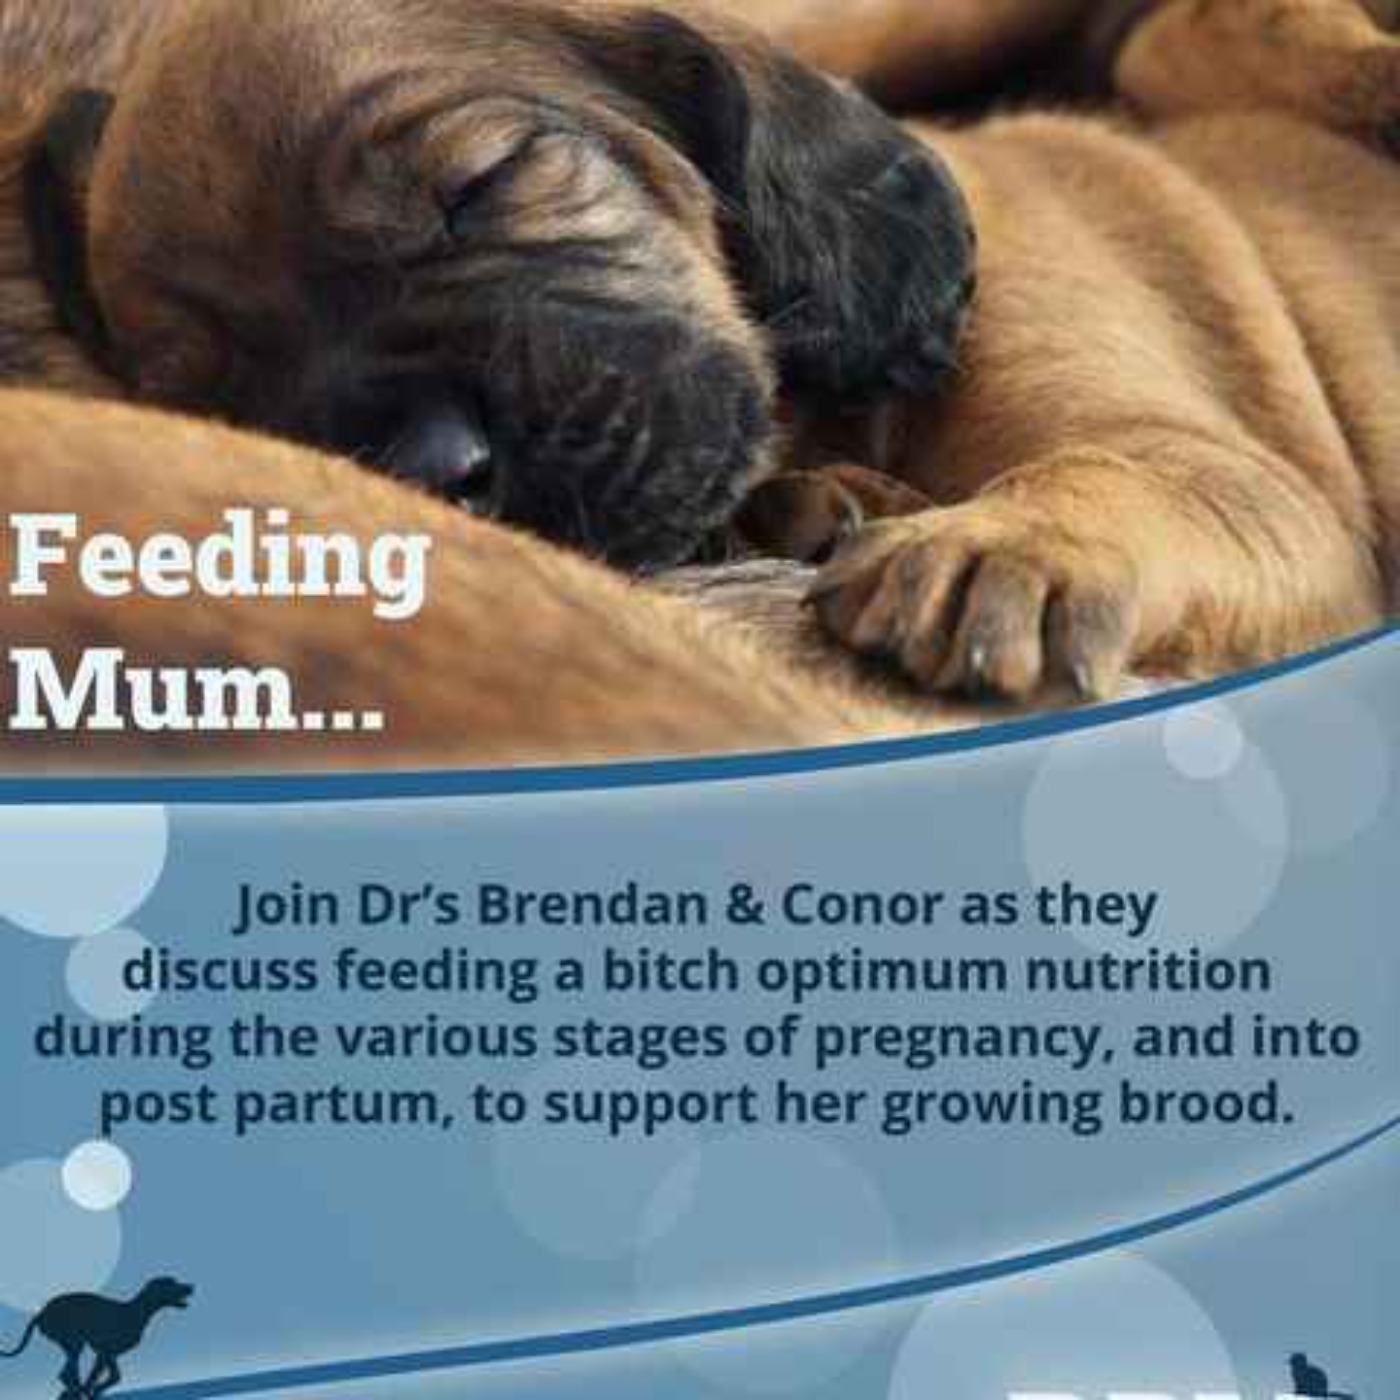 Feeding Mum